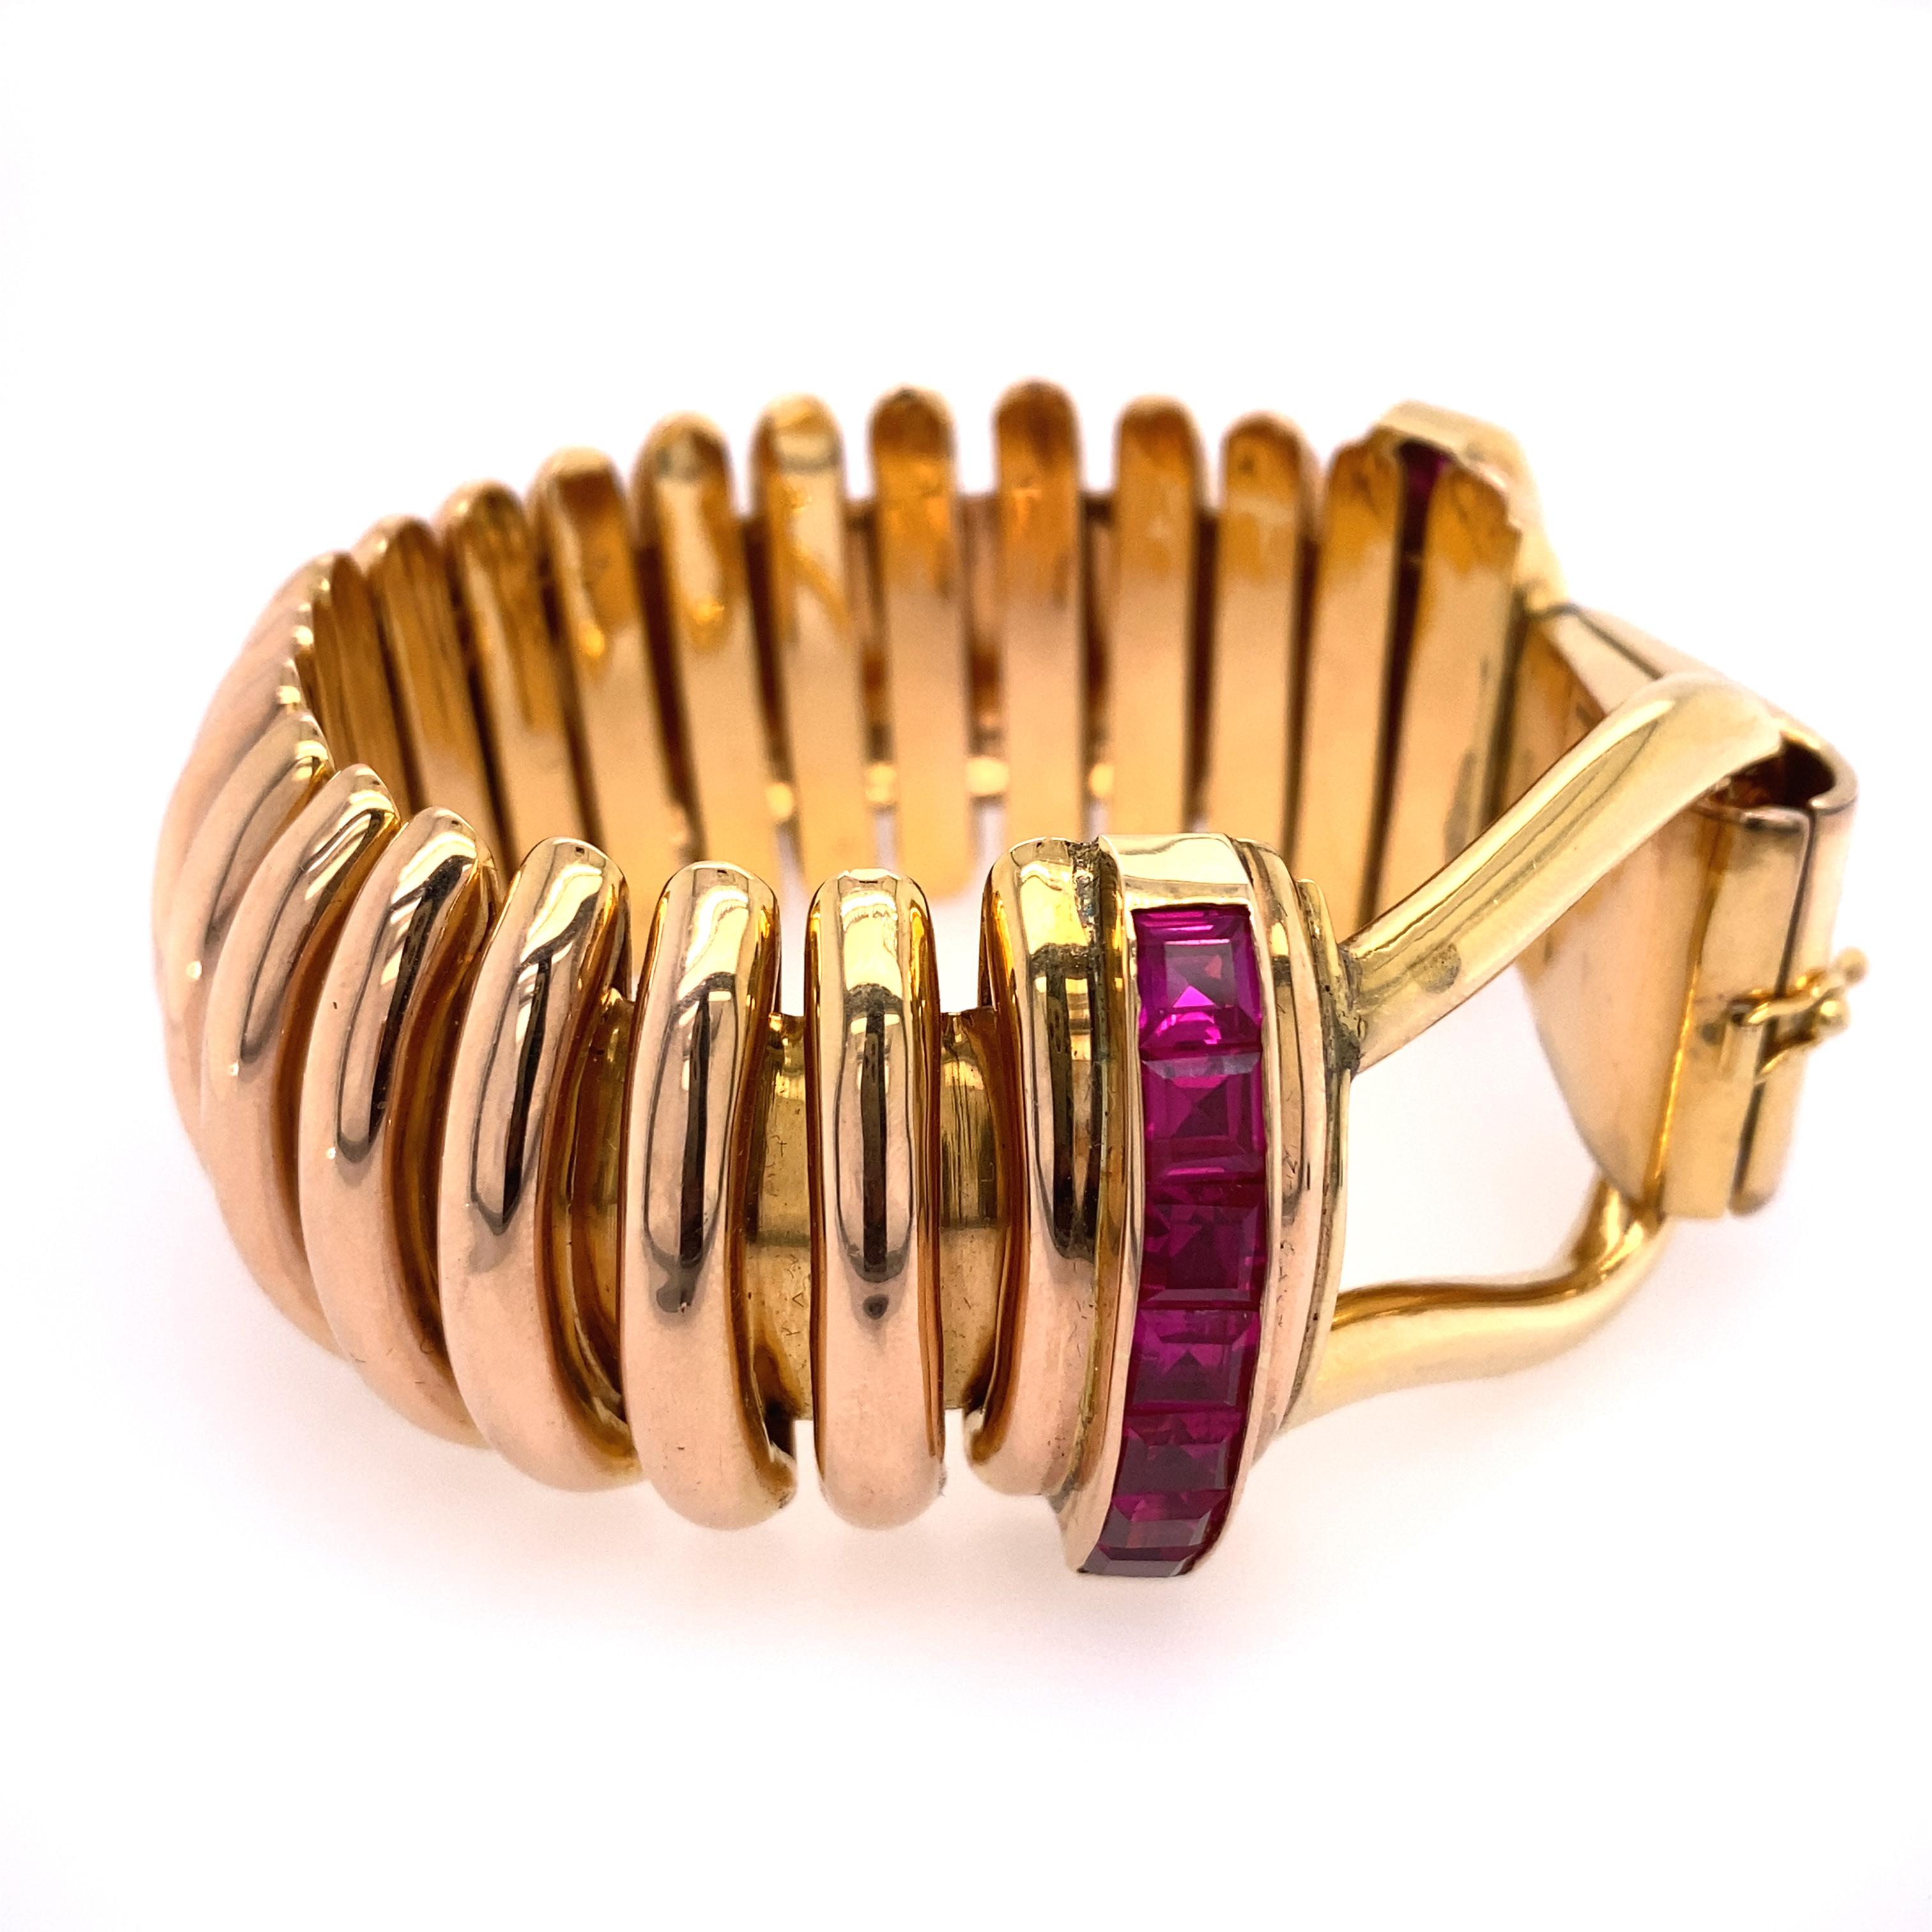 Heavy 18k Rose Gold Synthetic Ruby Diamond Bracelet.
Total weight 120.2 dwt.  Measurement of bracelet 8.50